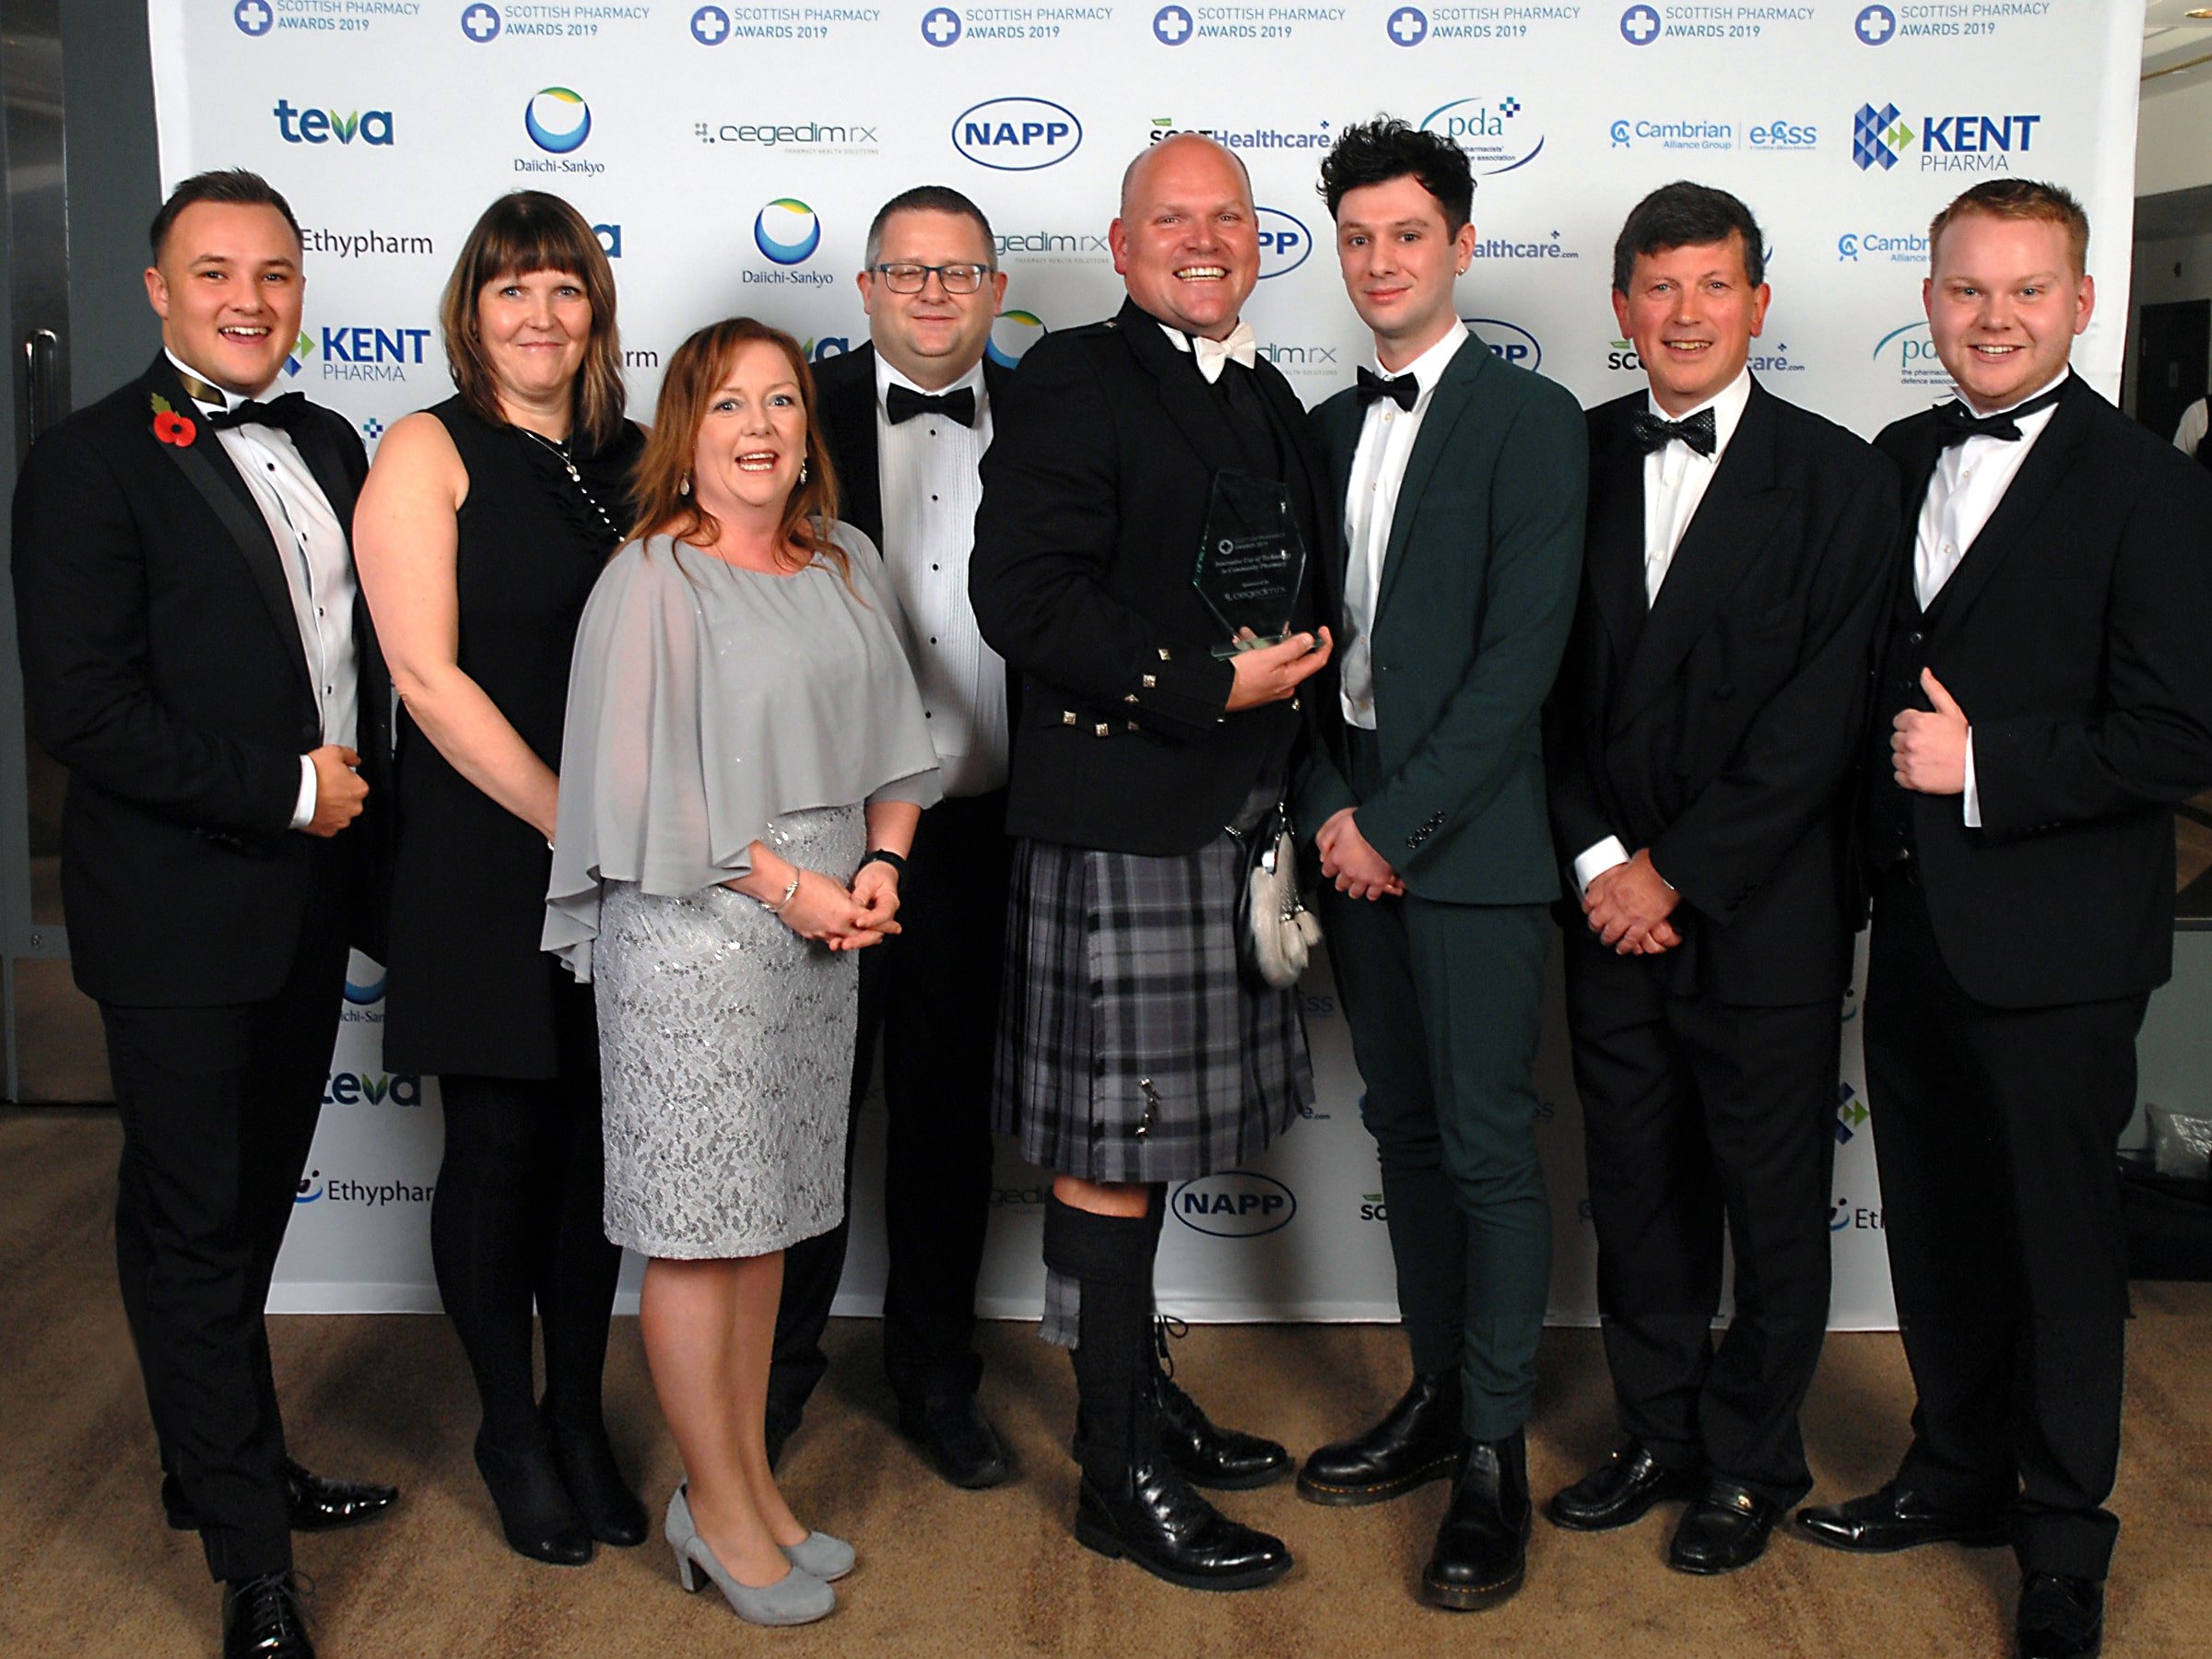 Innovative Use of Technology - Scottish Pharmacy Awards